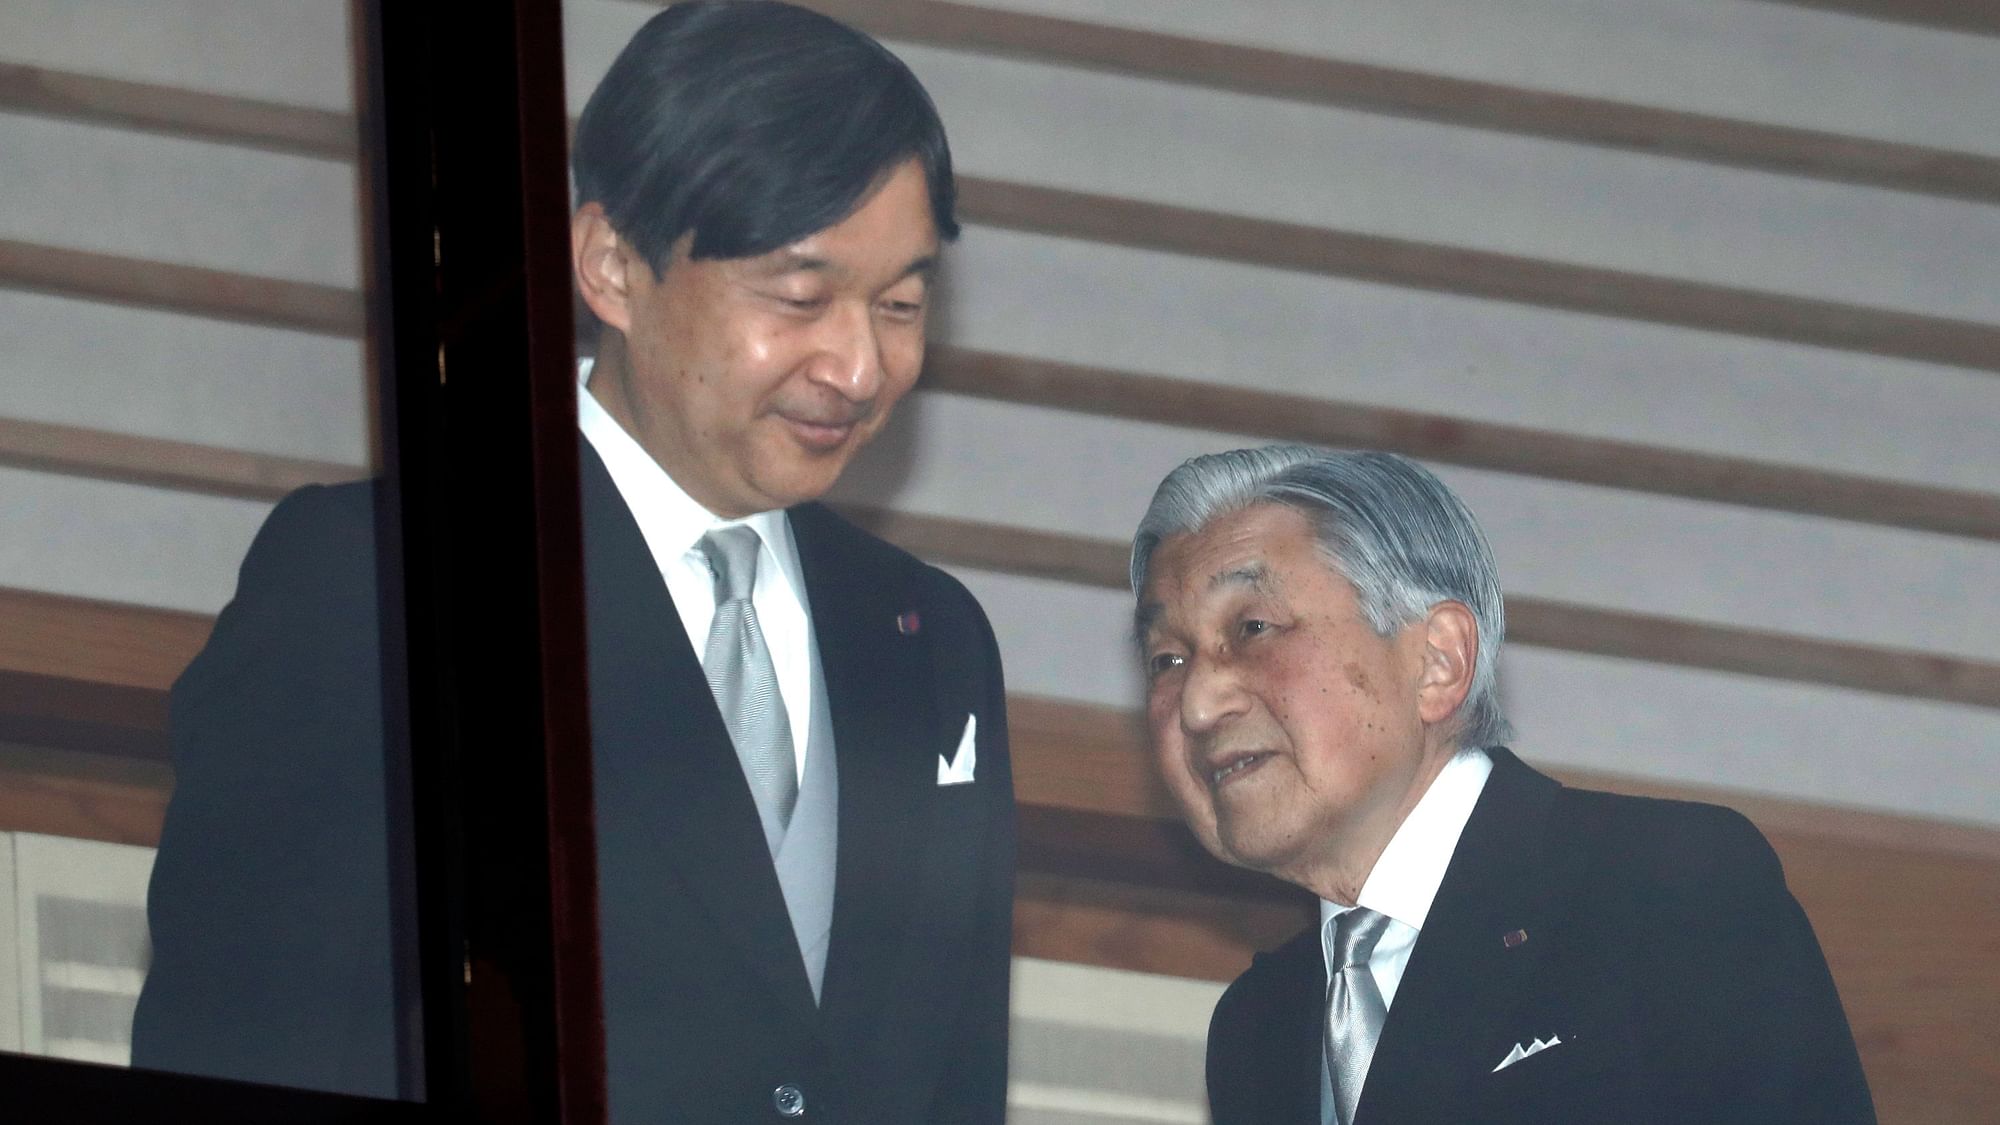 File photo of Japan’s Emperor Akihito (right) accompanied by Crown Prince Naruhito.